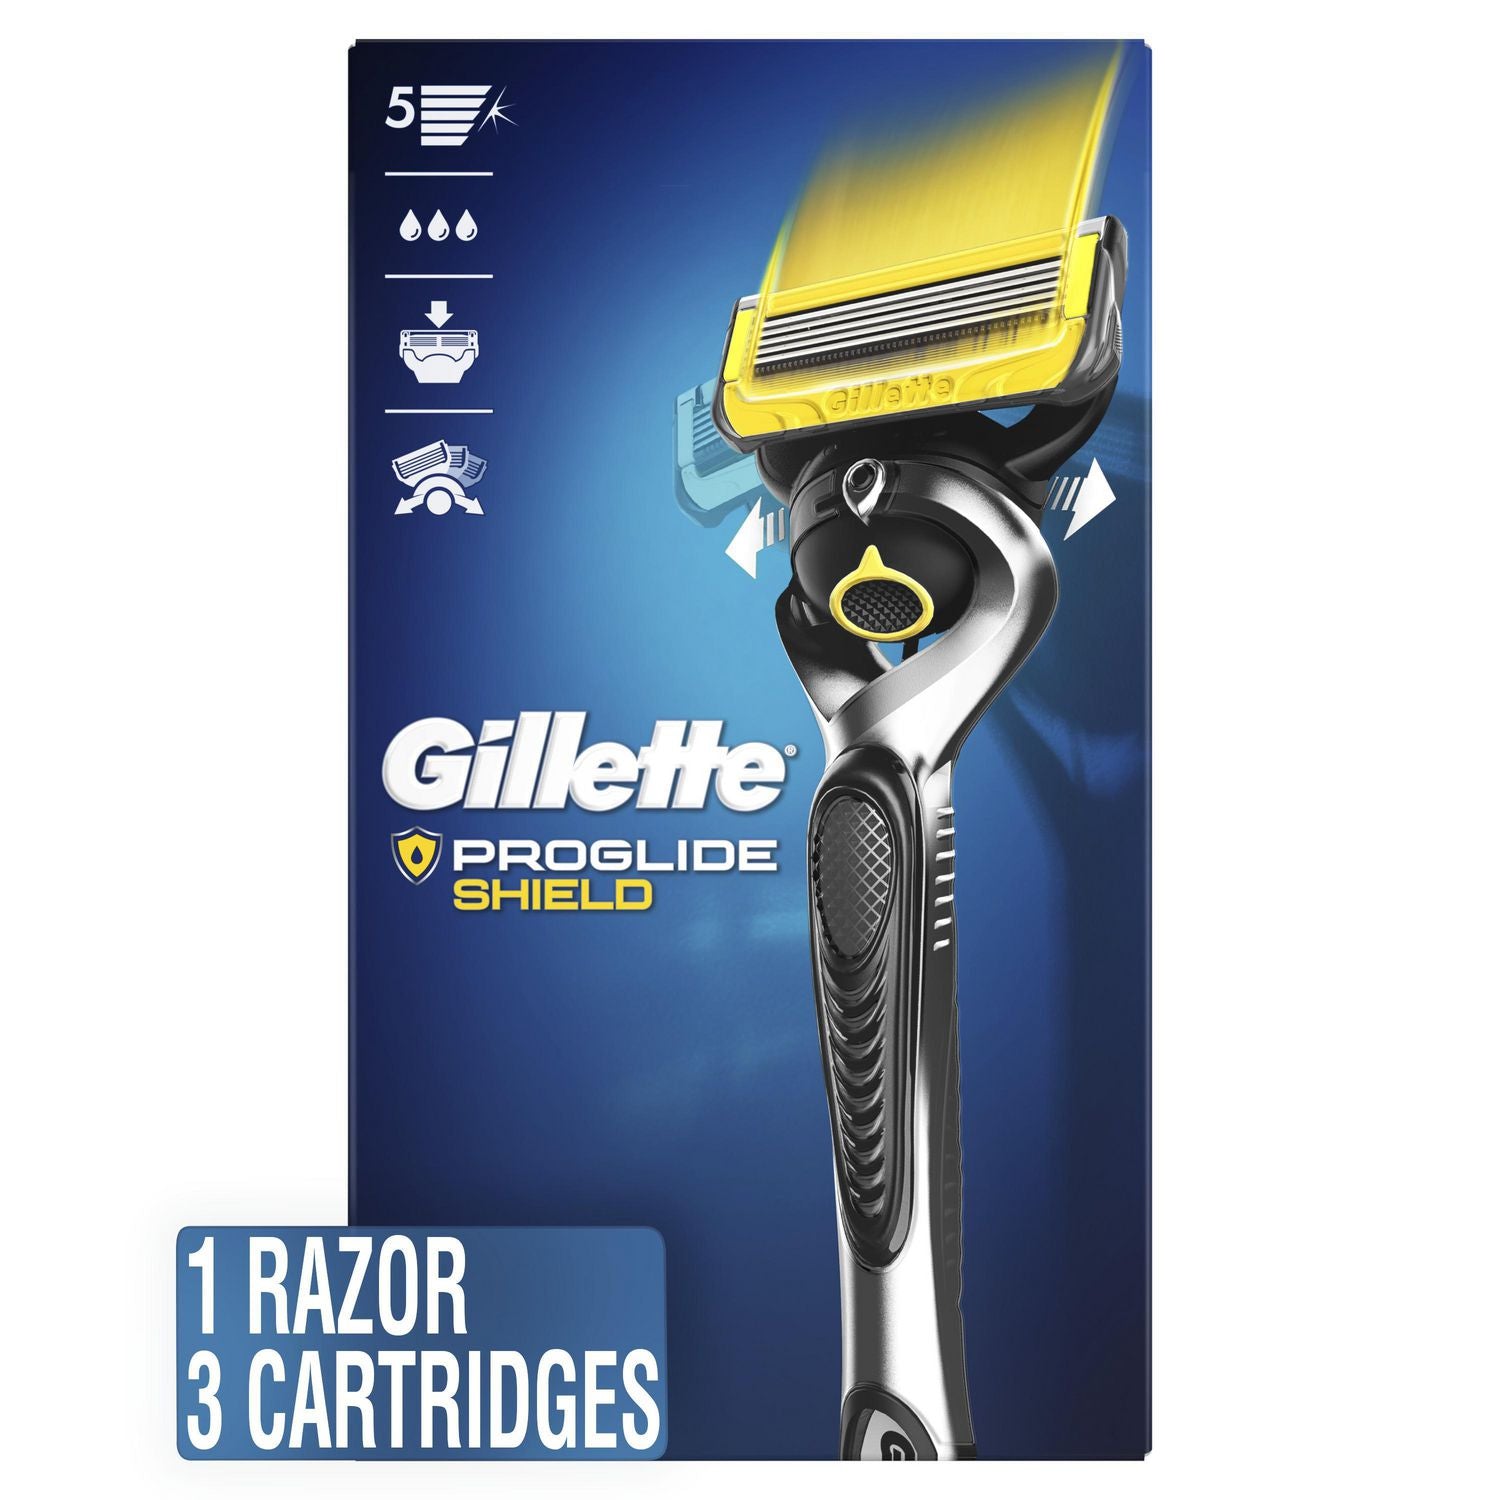 Gillette ProGlide Shield Men's Razor - 1 razor, 3 cartridges